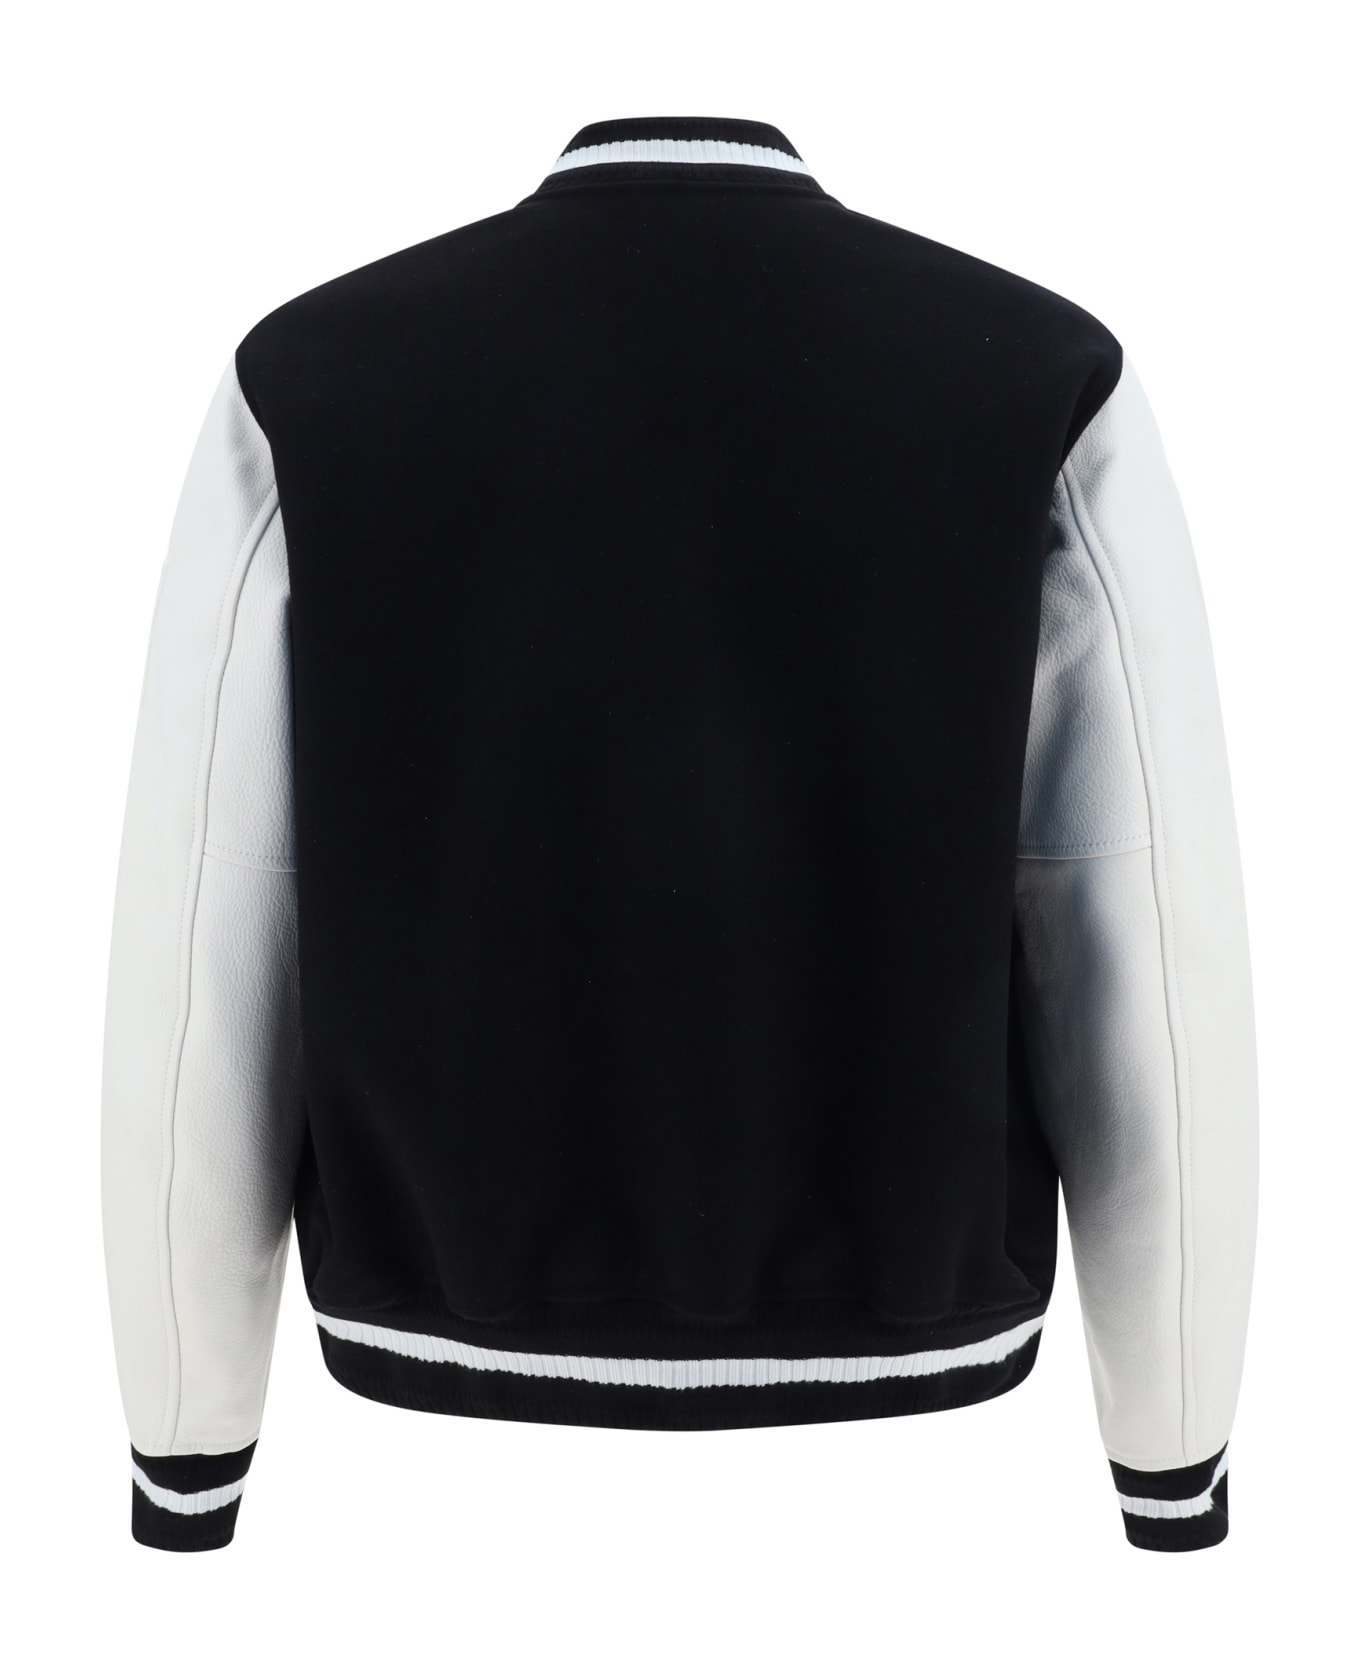 Givenchy Varsity College Jacket - Black